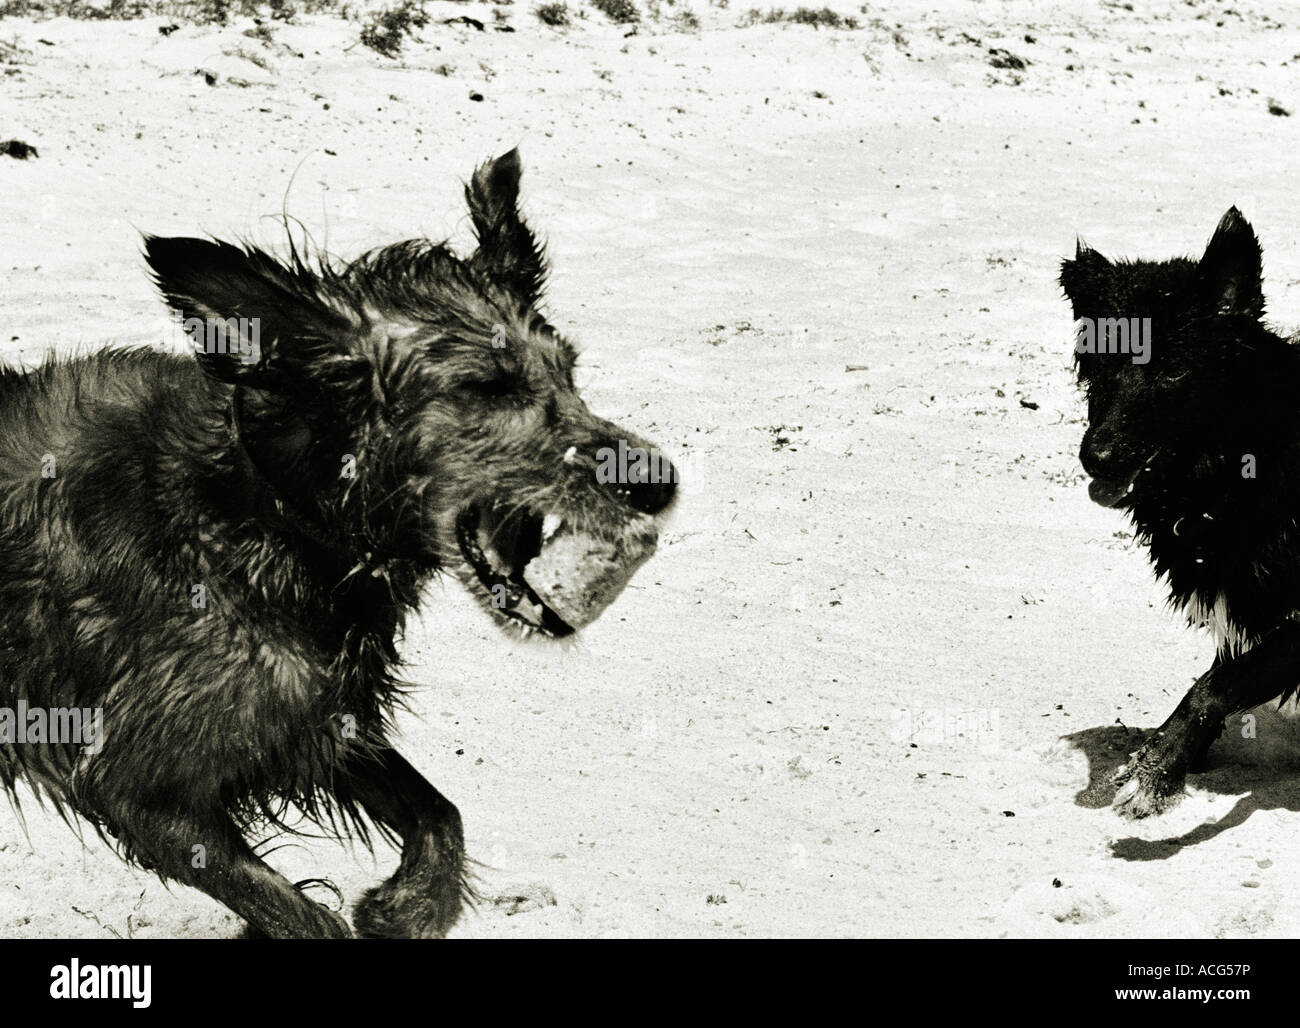 Zwei Hunde am Strand spielen. Stockfoto